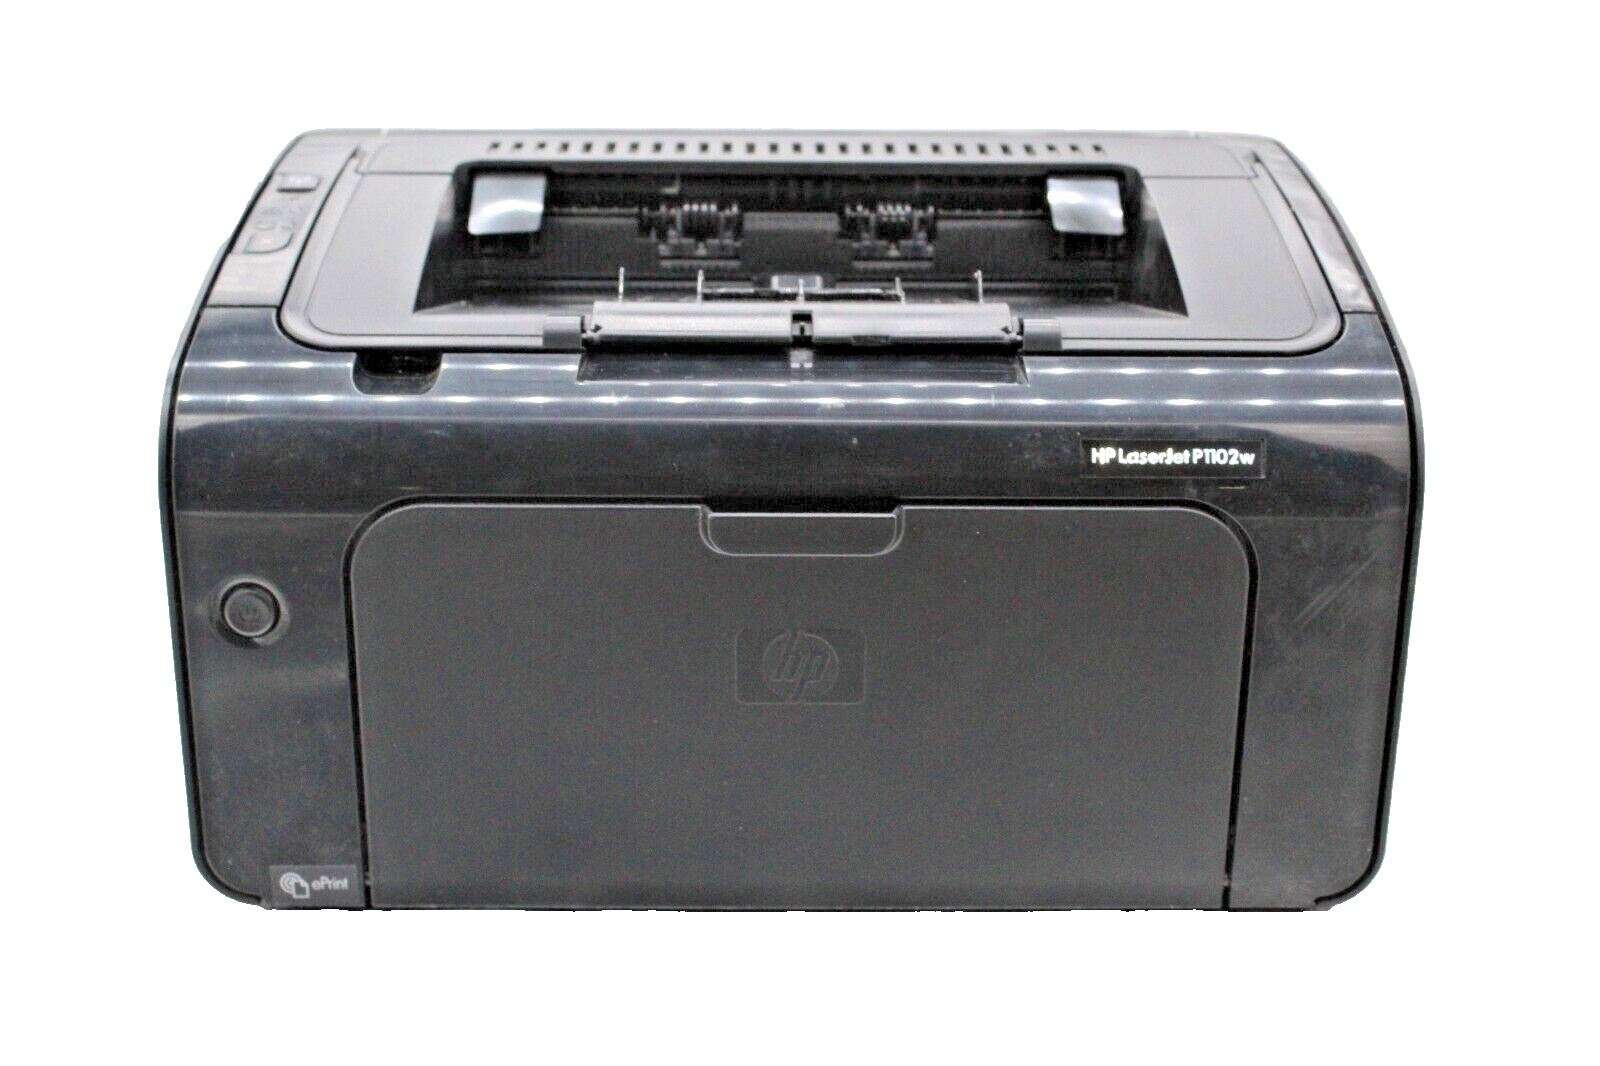 HP LaserJet Pro P1102w Wireless Mono Printer No Toner TESTED